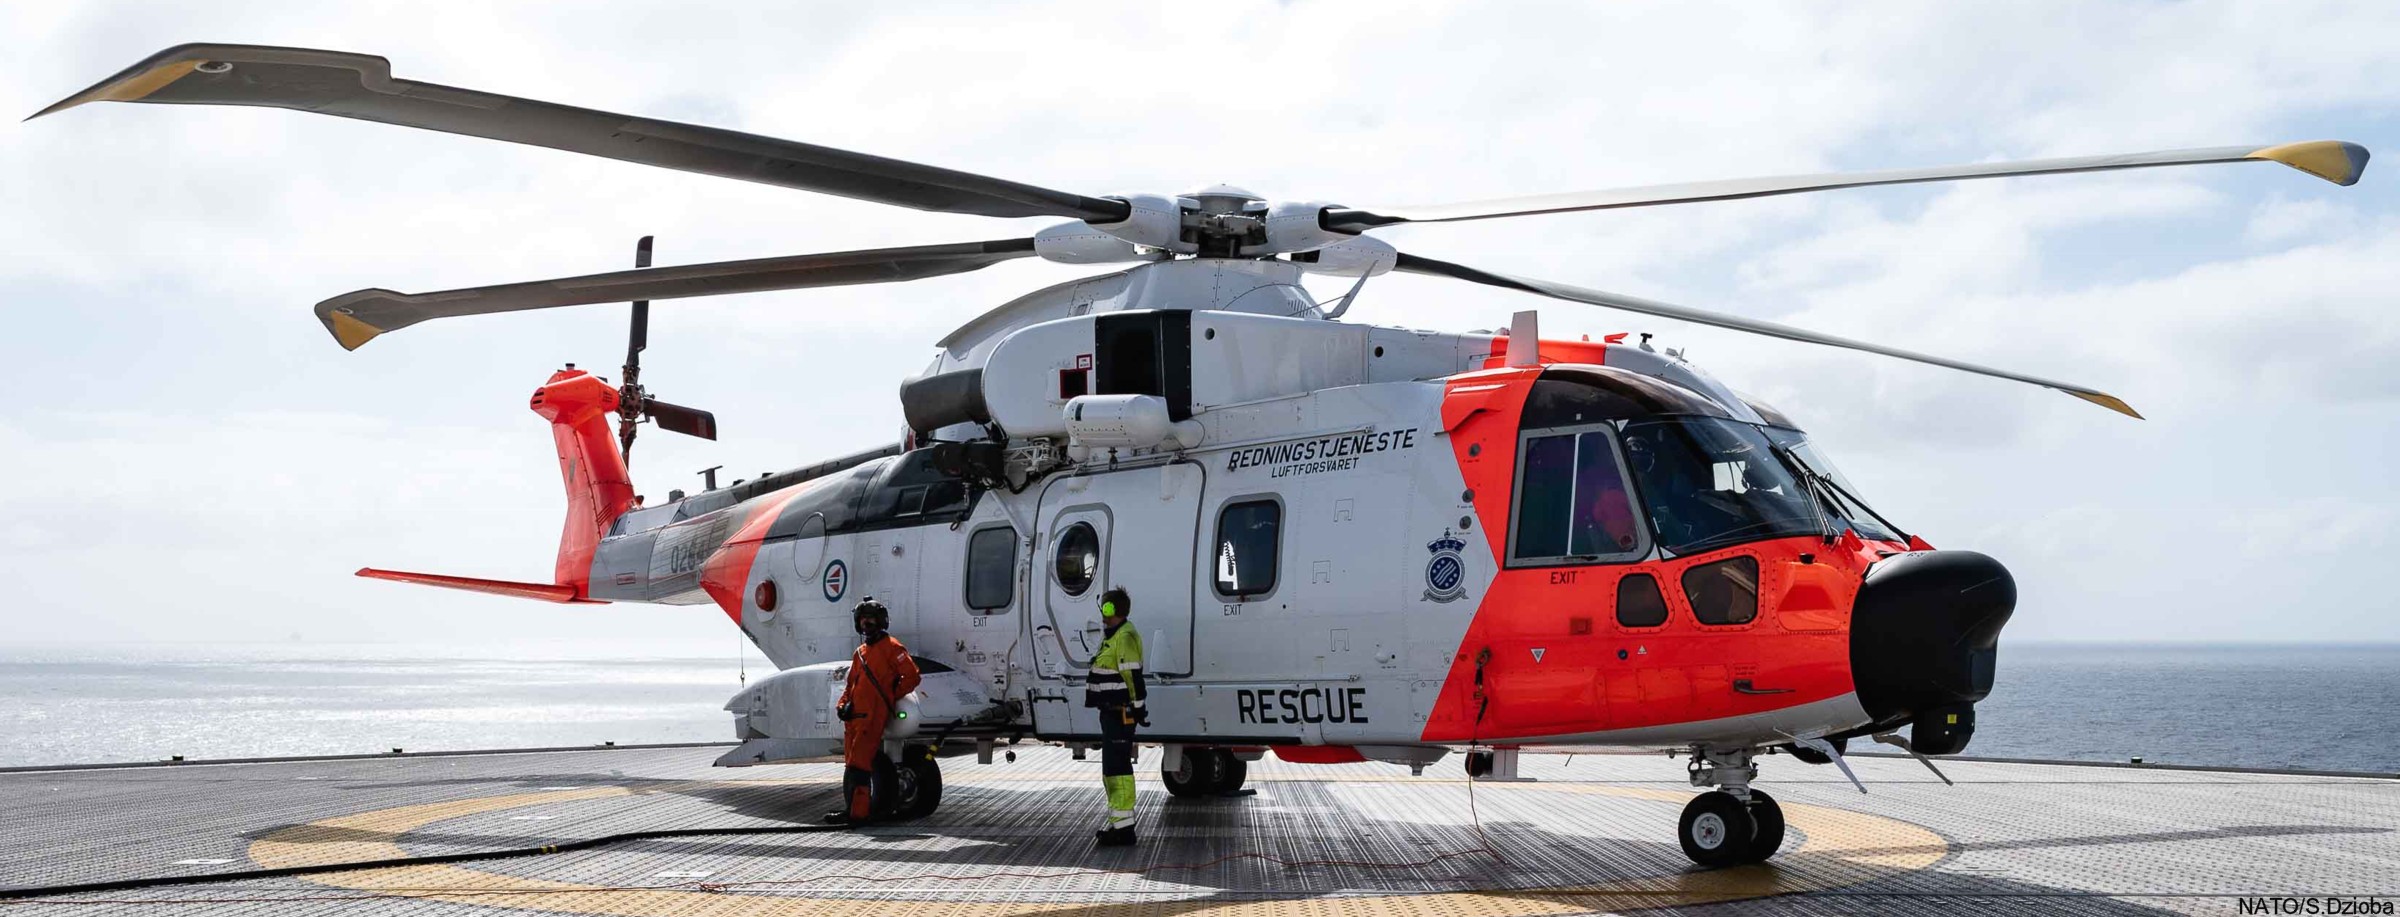 agusta westland aw101 rescue helicopter royal norwegian air force luftforsvaret sar queen 0284 02